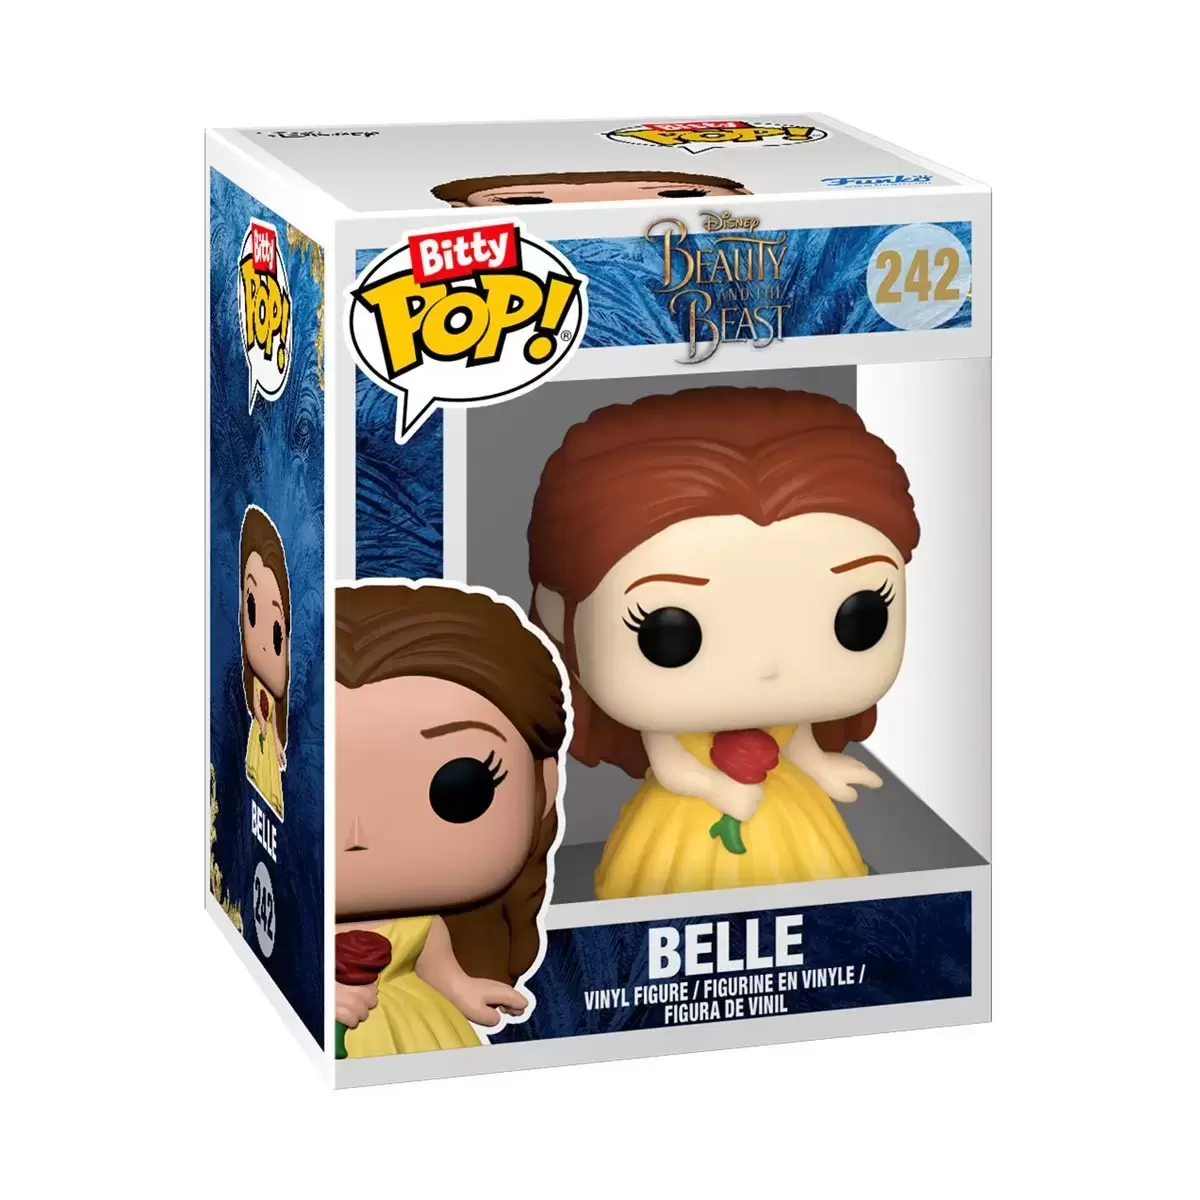 Bitty POP! - Disney Princess - Belle